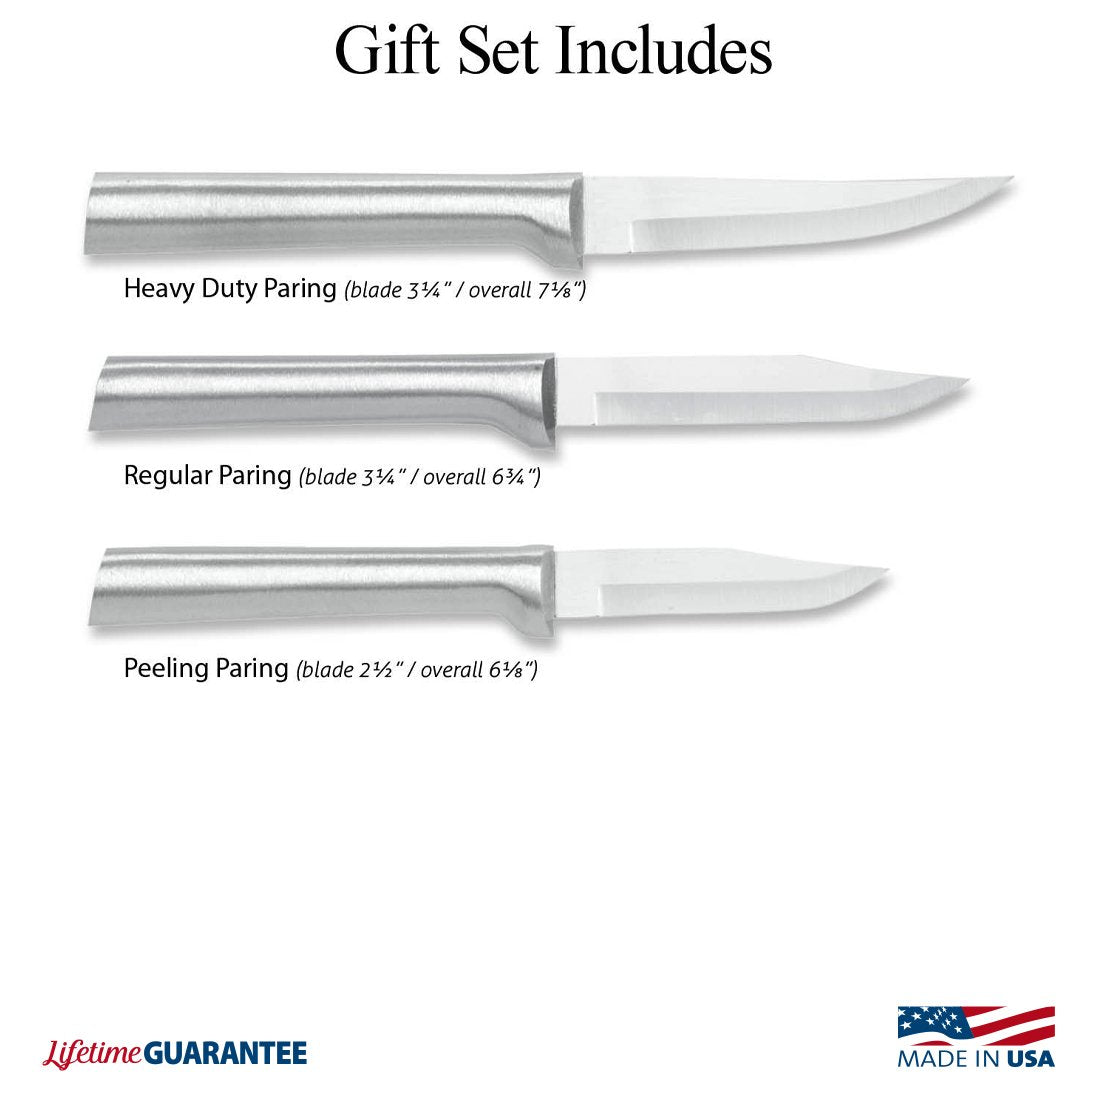 Rada Cutlery Serrated Steak Knife, Stainless Steel